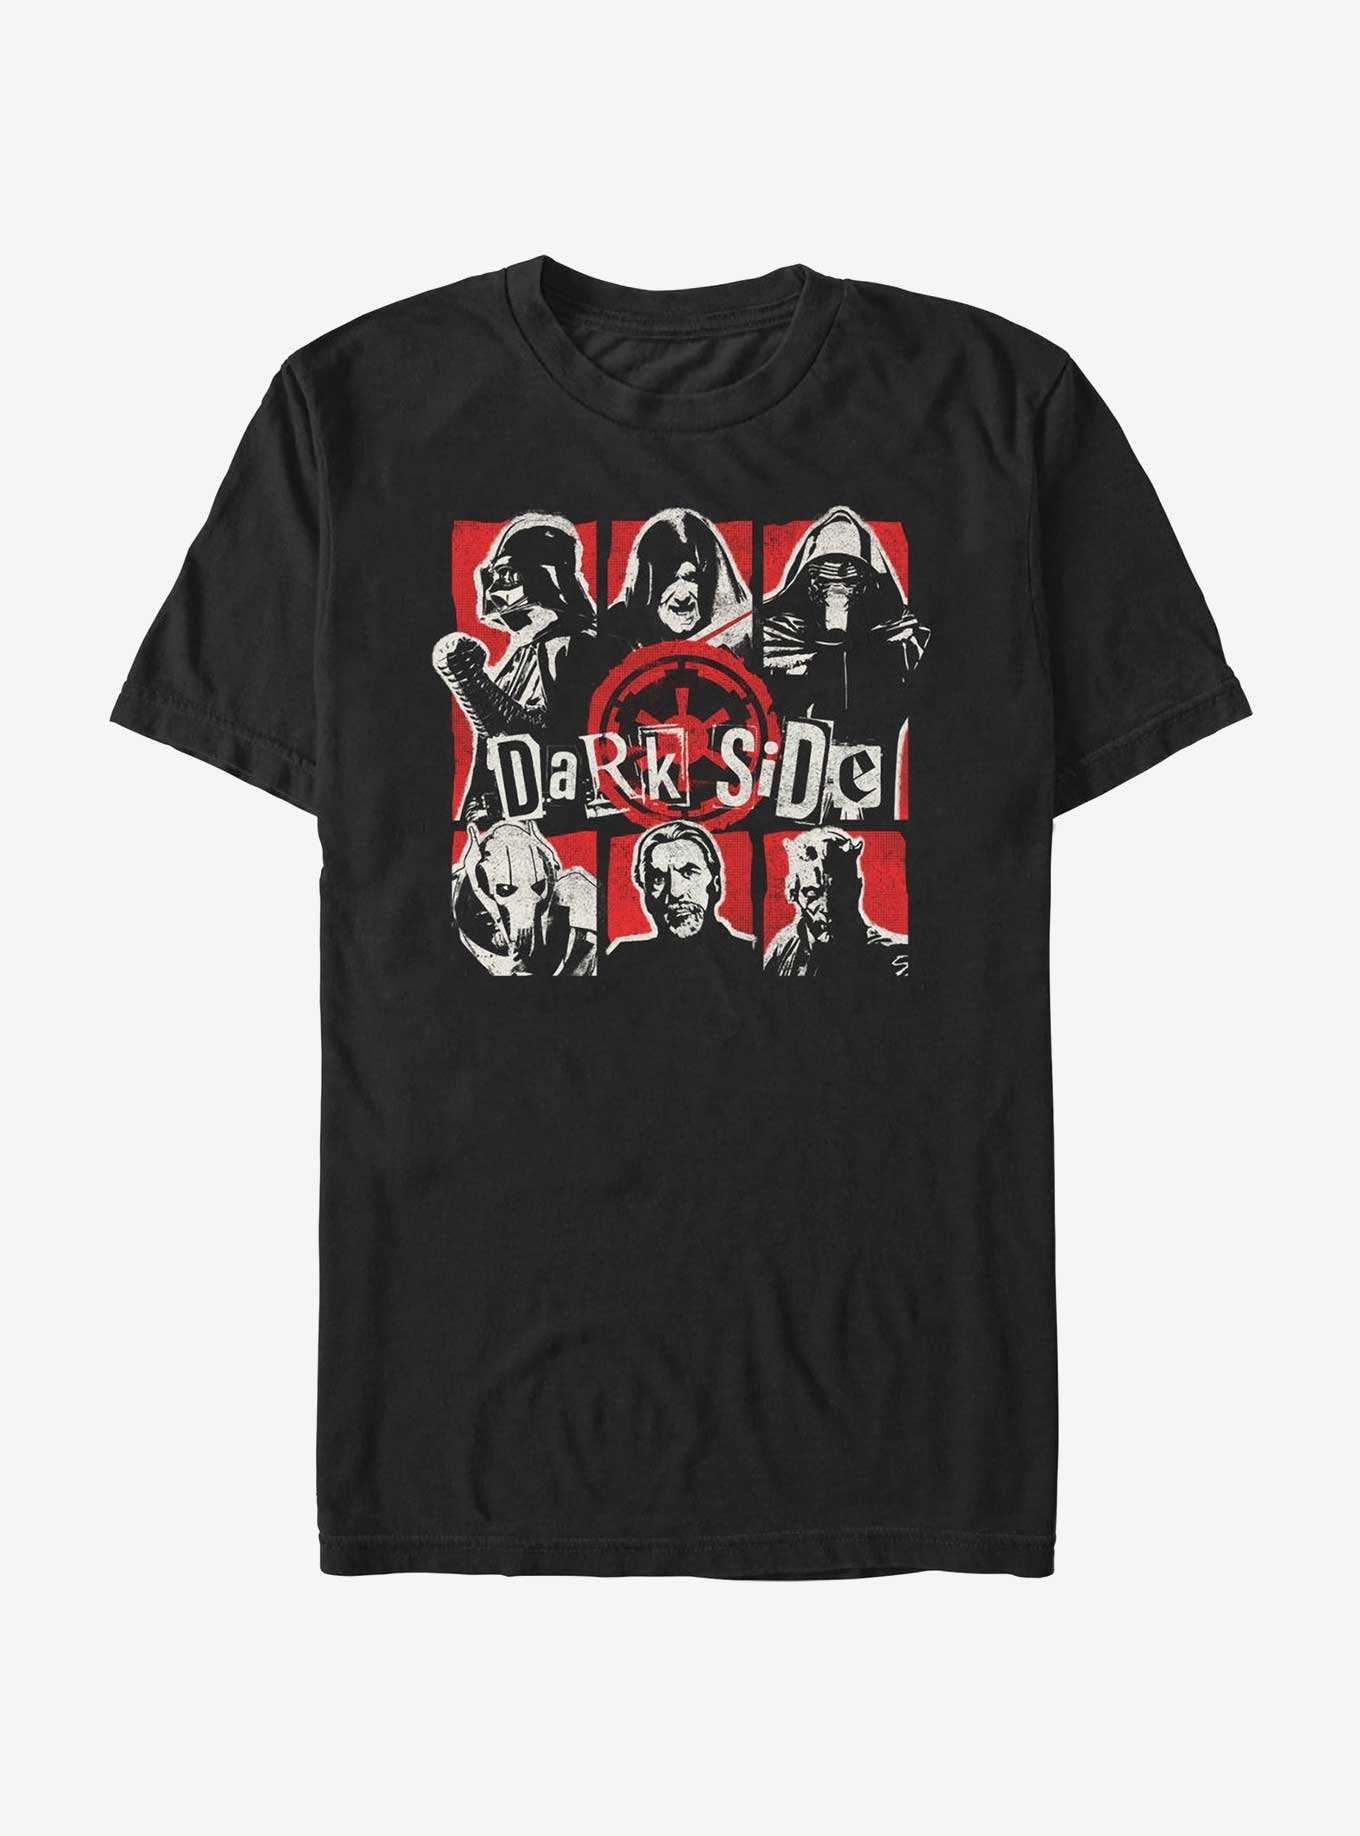 Star Wars Dark Side Grid T-Shirt, , hi-res